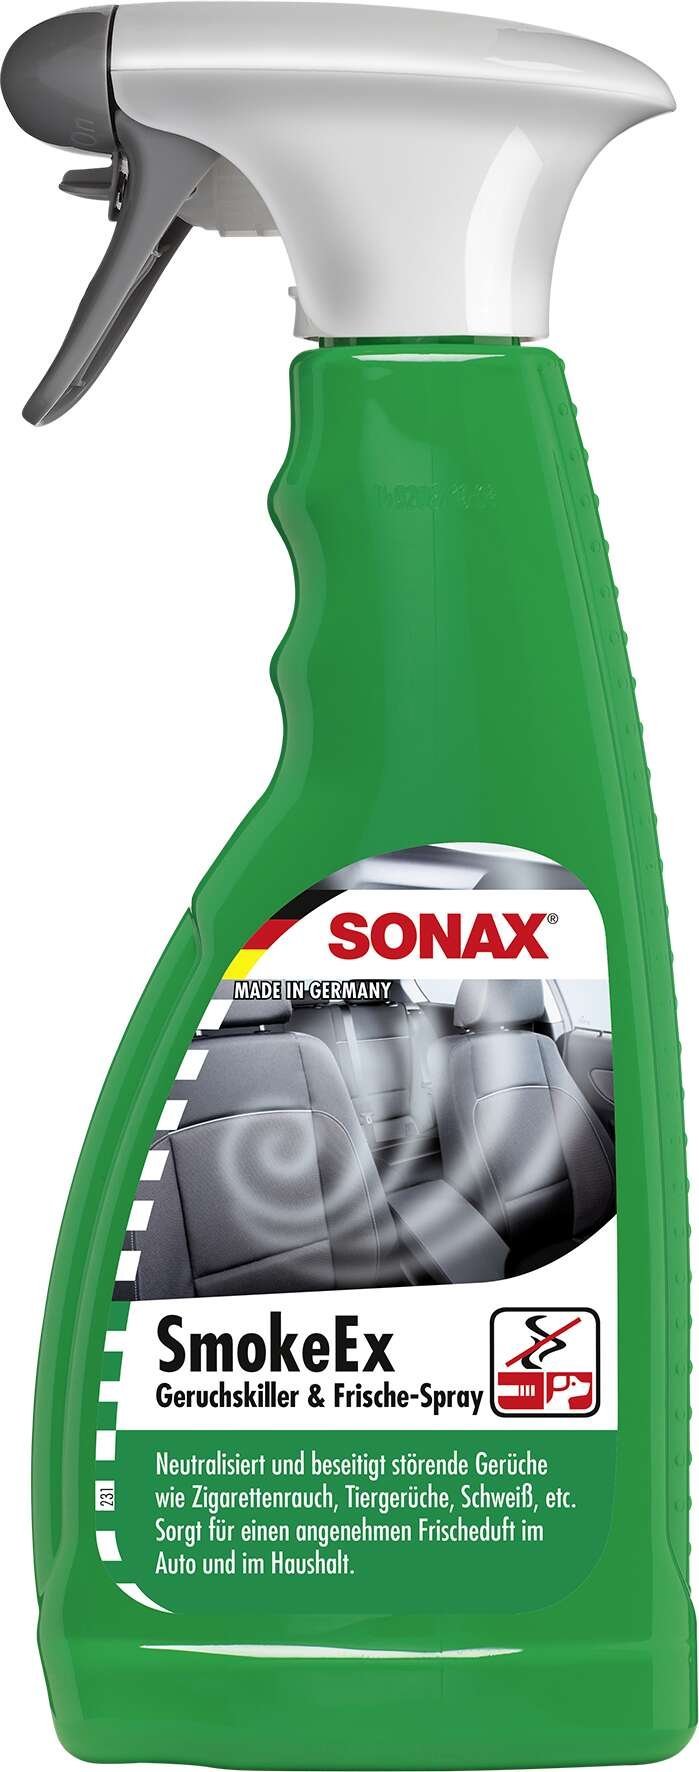 SONAX SmokeEX, killer degli odori, flacone spray PET da 500 ml